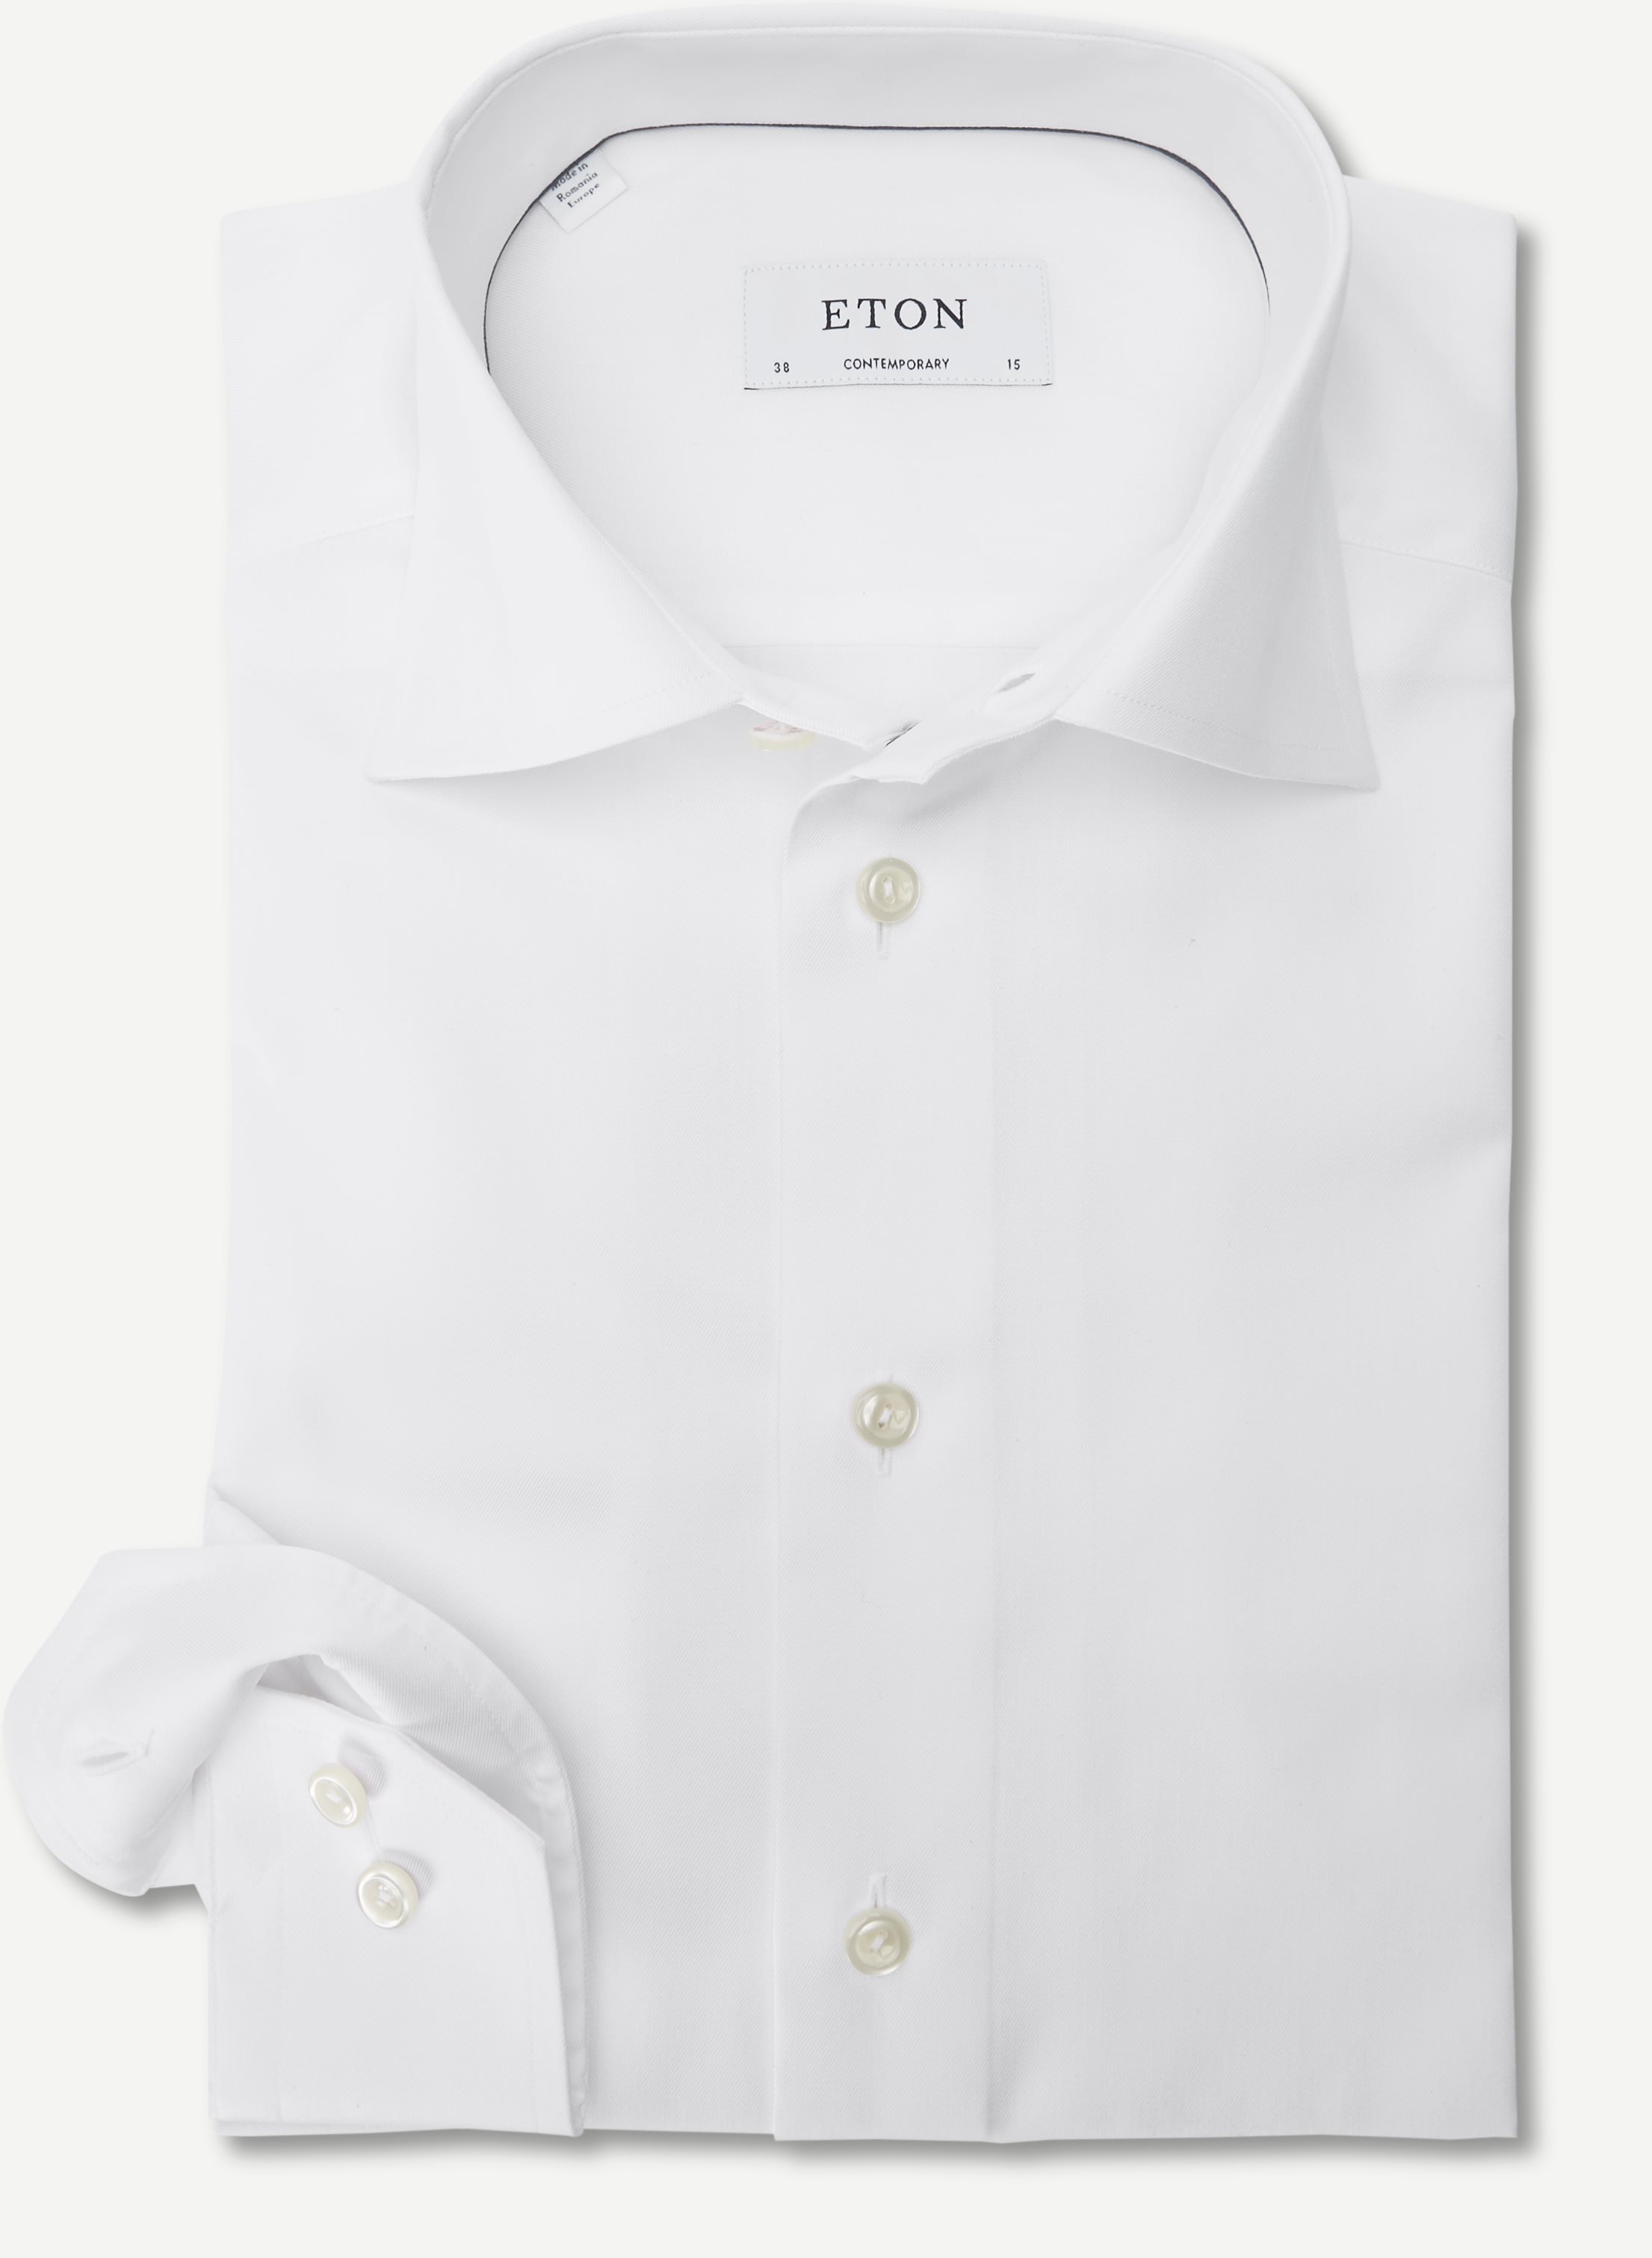 3000 Signature Twill Dress Shirt - Shirts - Contemporary fit - White